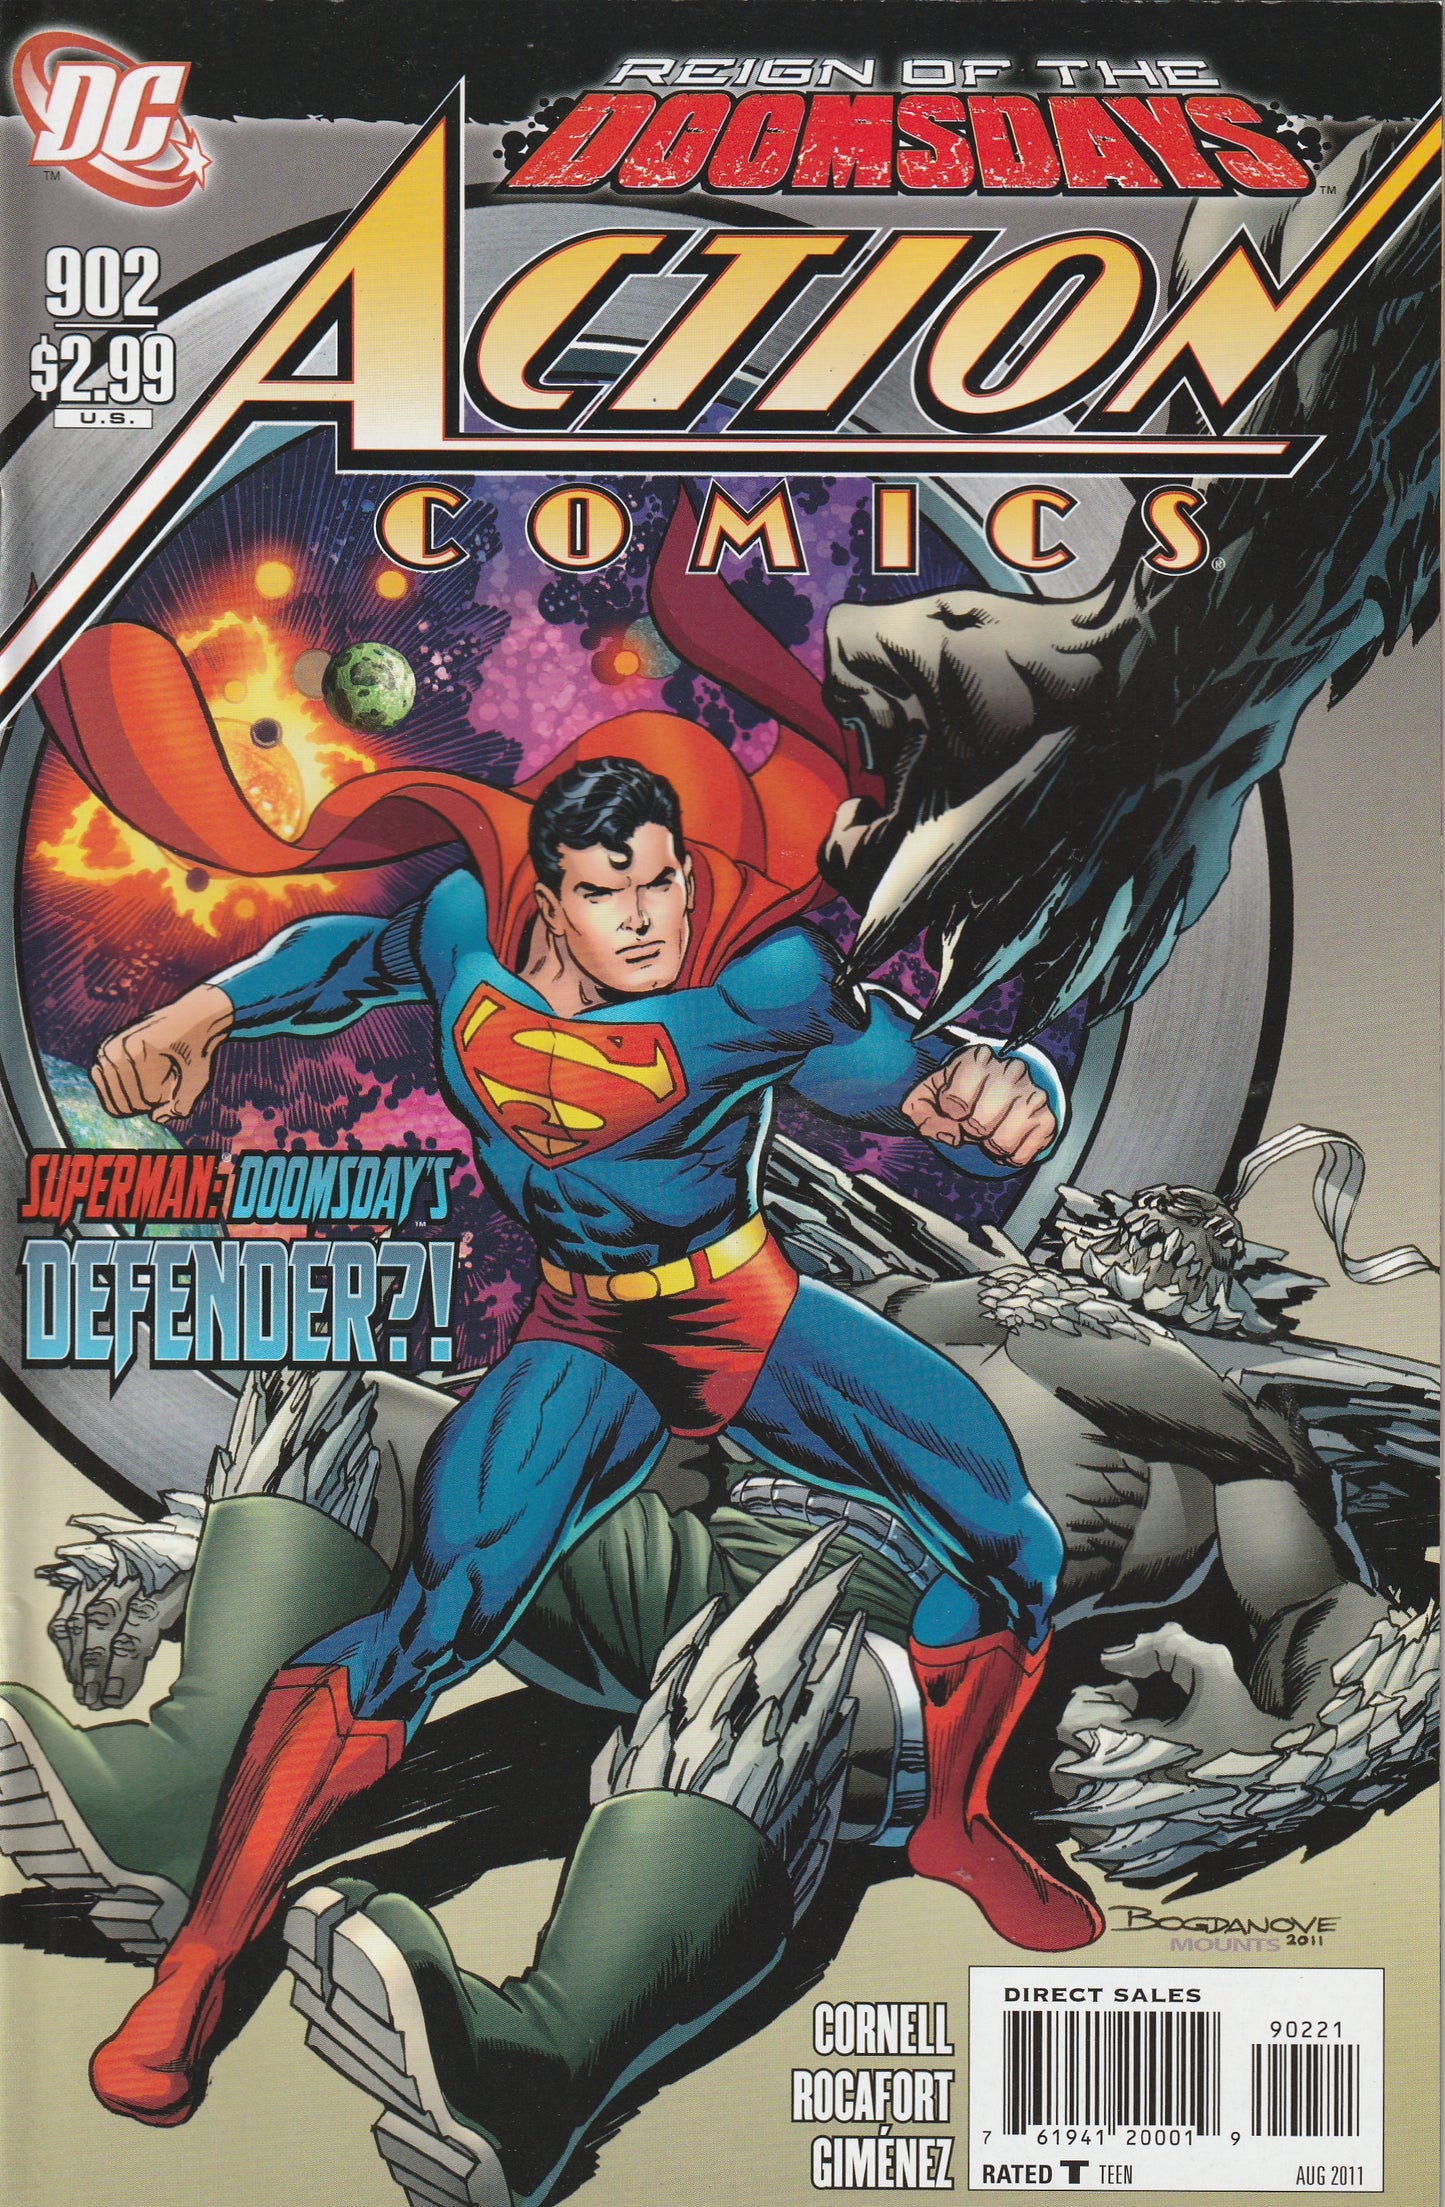 Action Comics #902 (2011) - Jon Bogdanove Variant Cover 1:10 Ratio